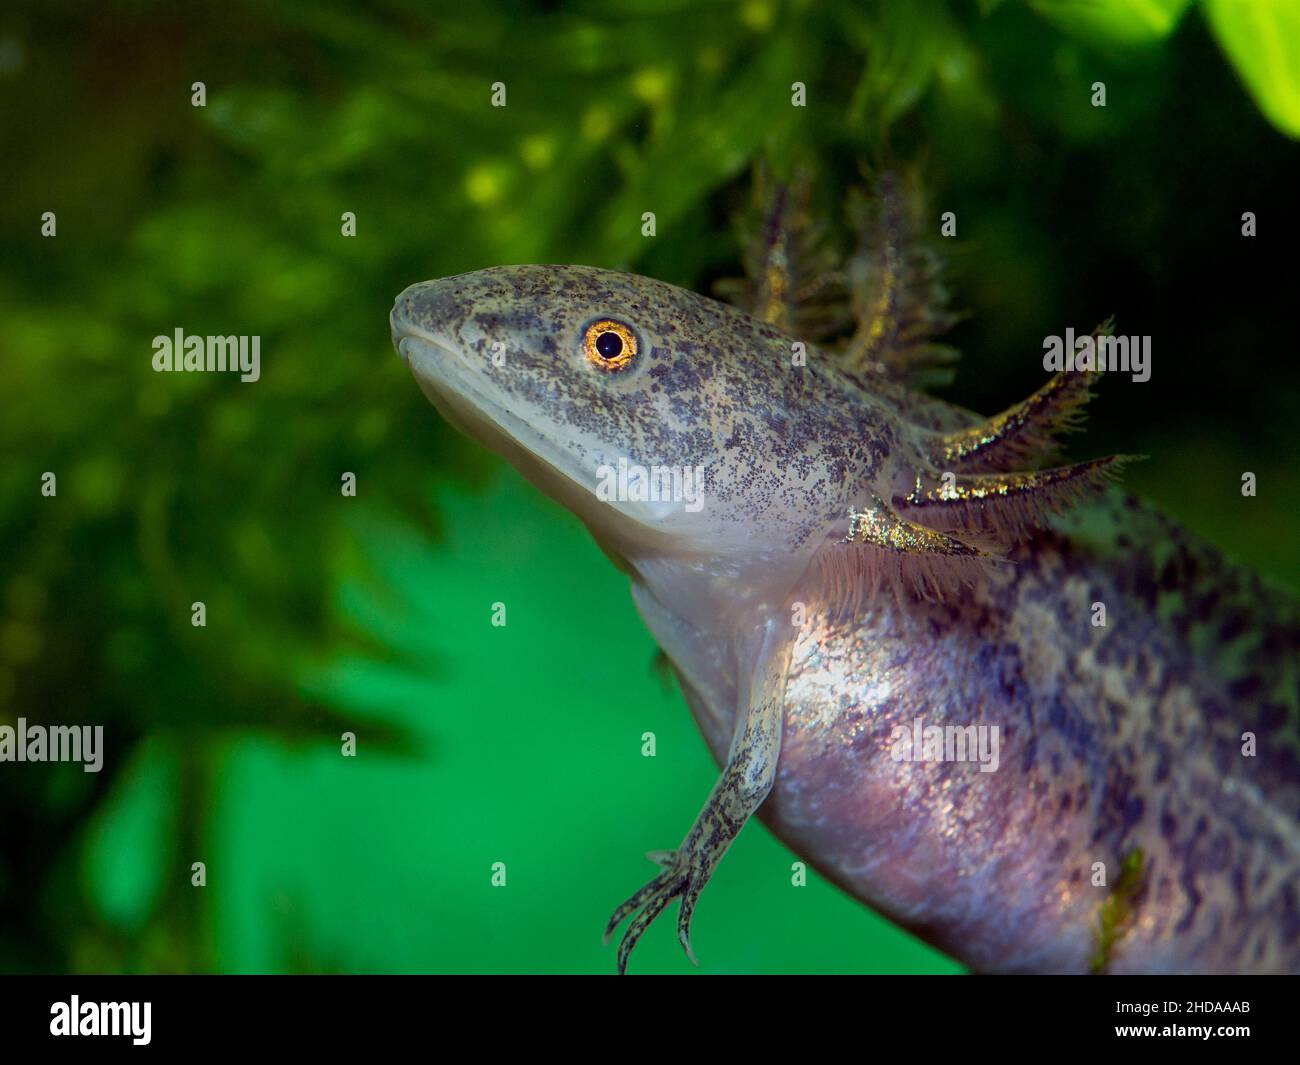 axolotl salamander, Ambystoma mexicanum, cECP 2018 Stock Photo